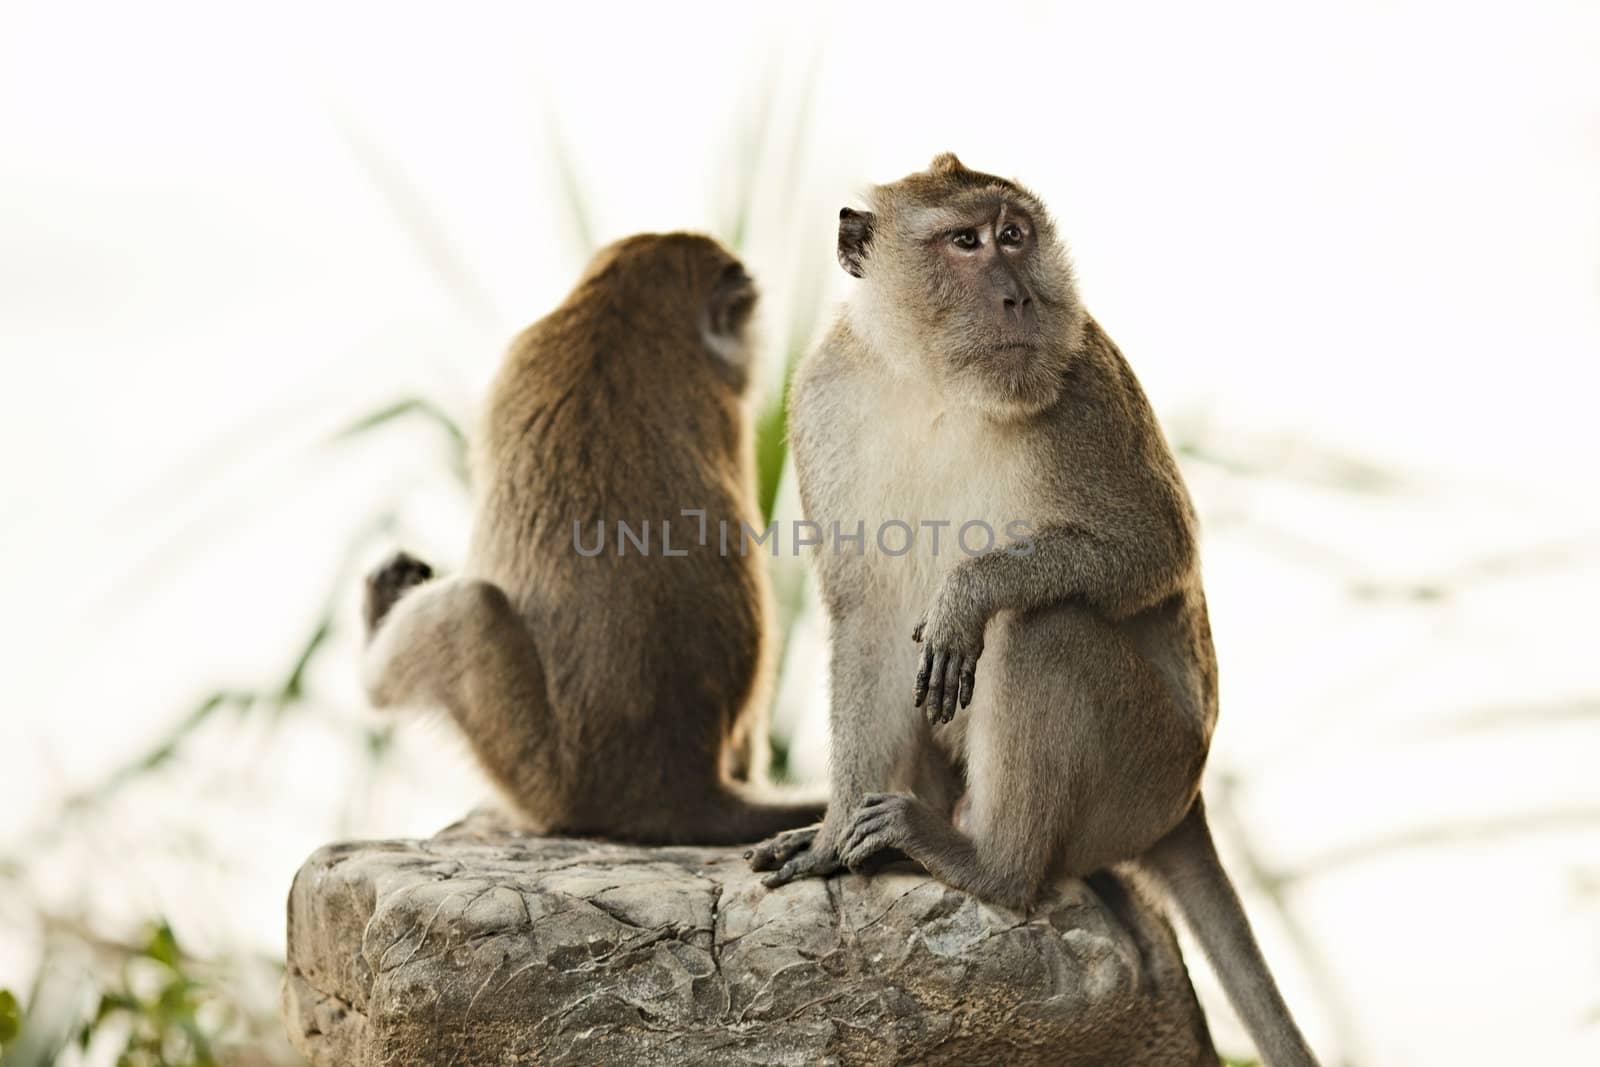 two macaque monkey sitting on big stone